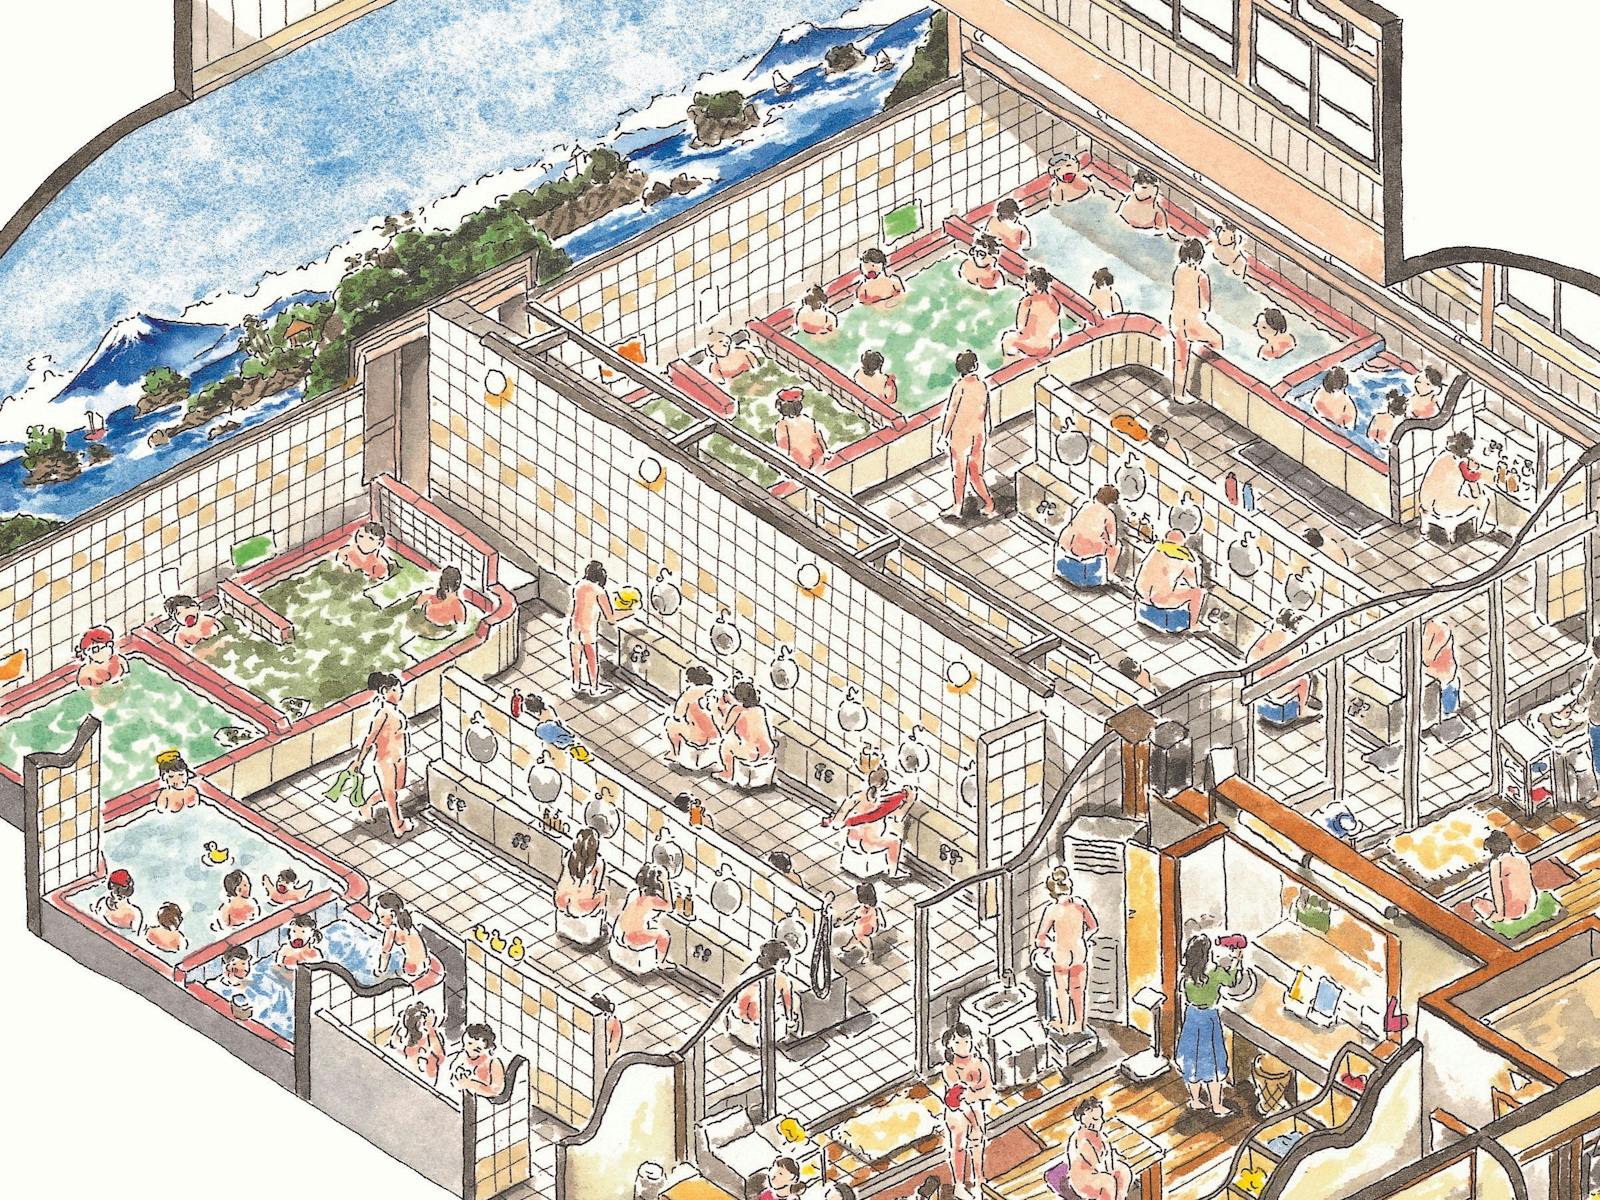 Image for Steam Dreams: The Japanese Public Bath